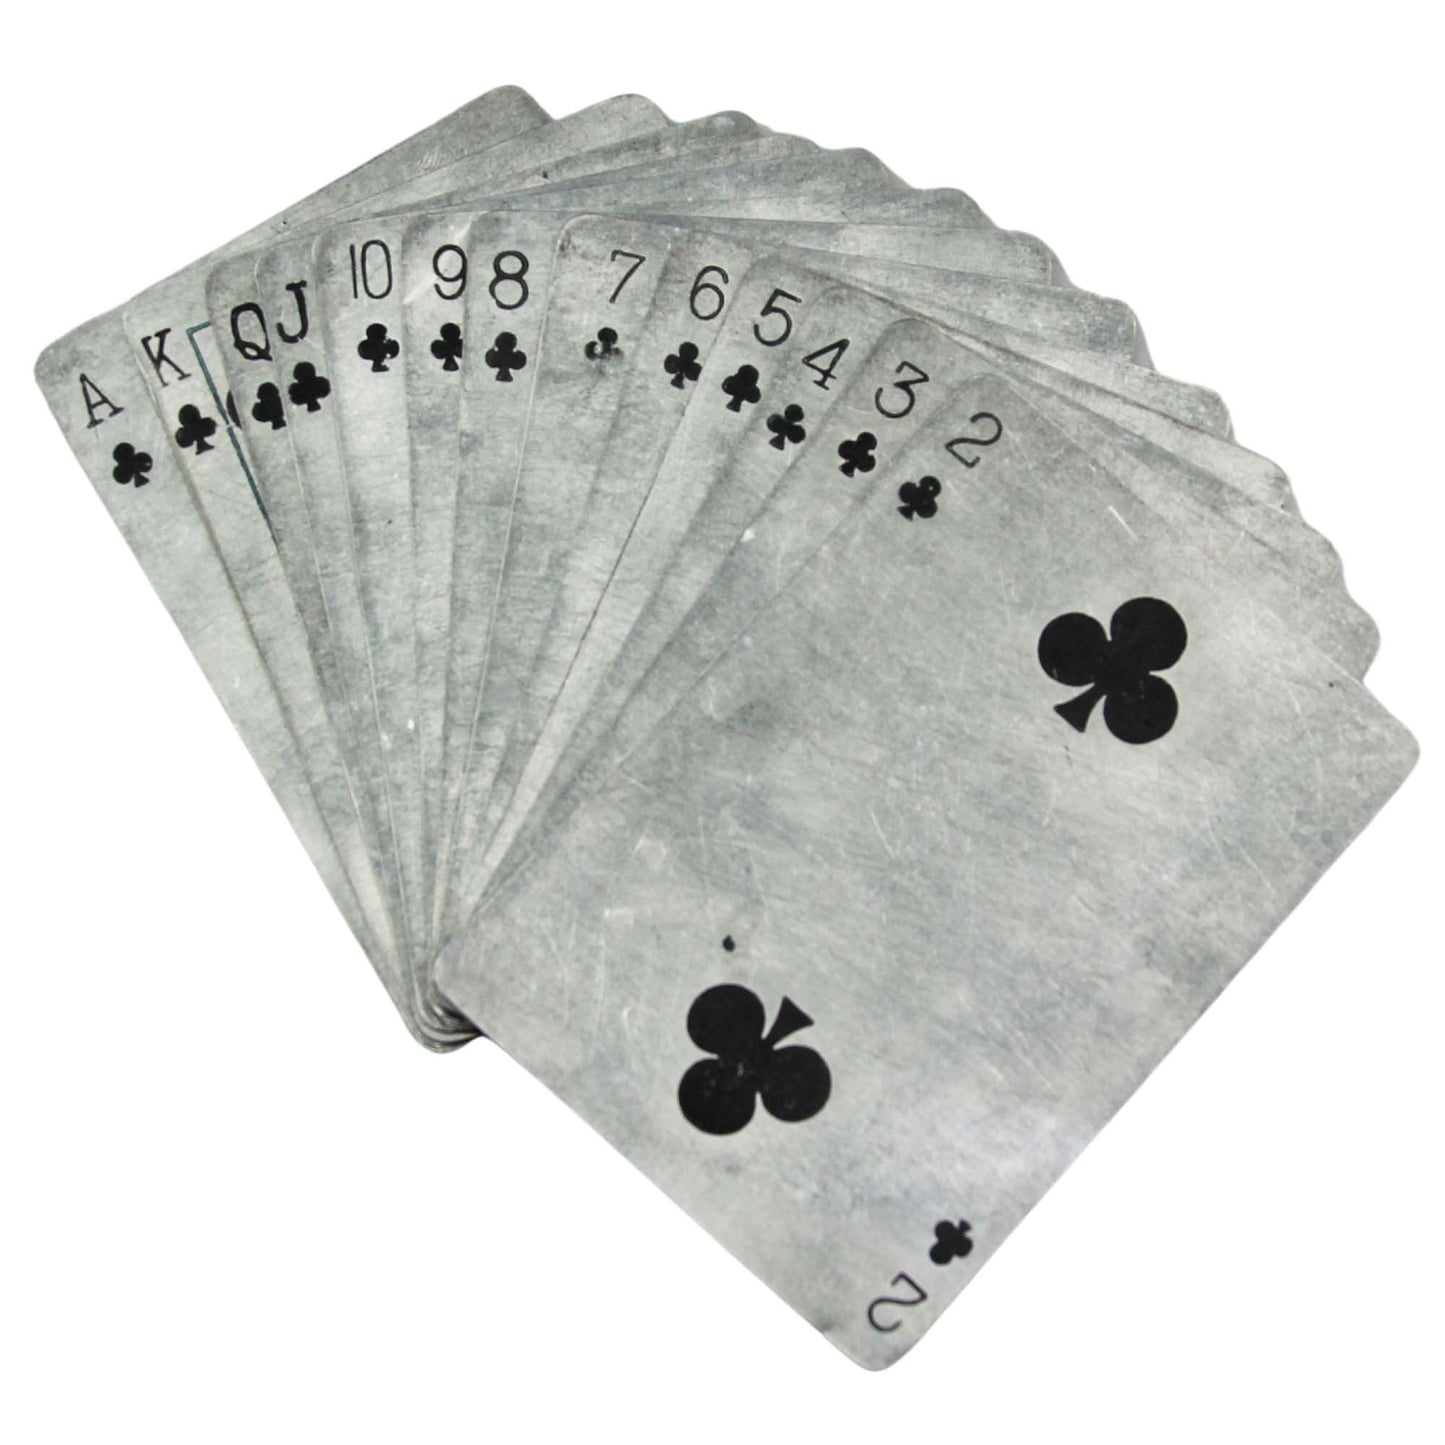 Aluminum Playing Cards